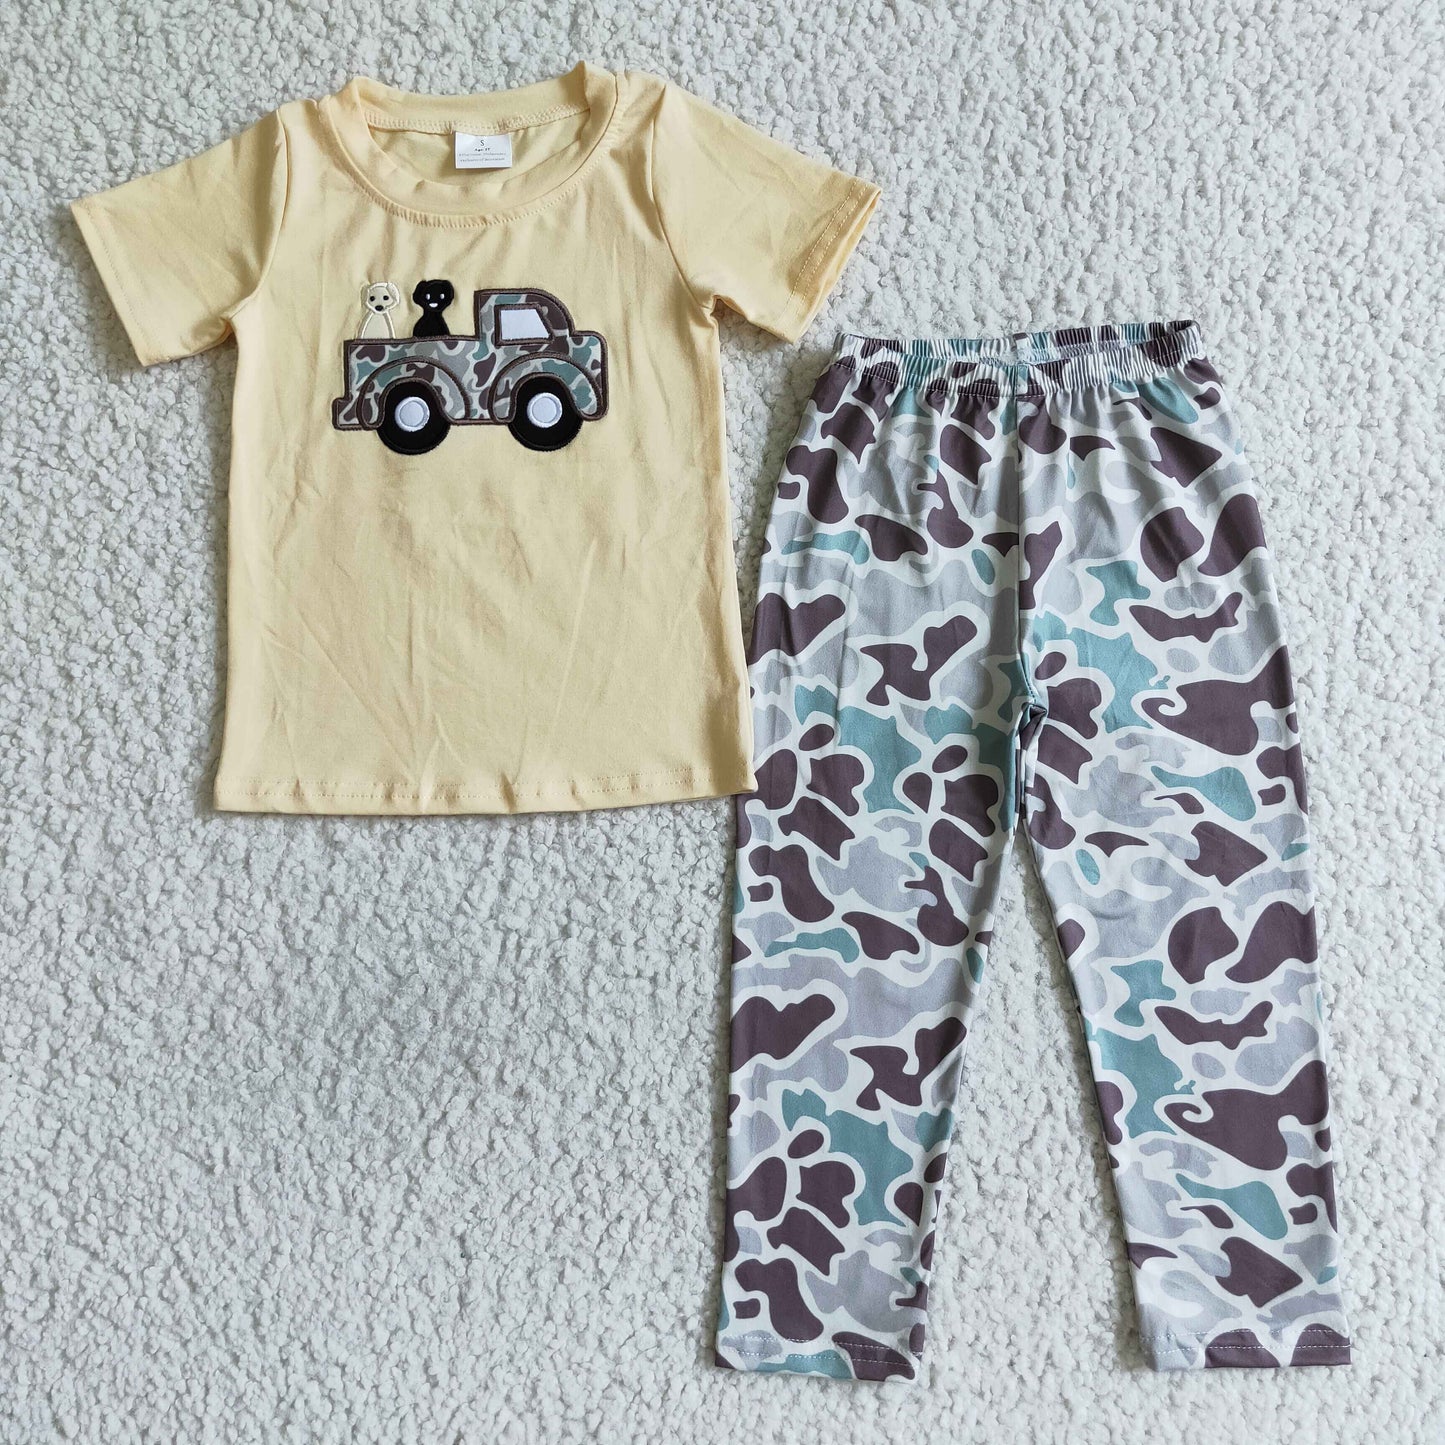 Dog camo truck embroidery boy clothing set